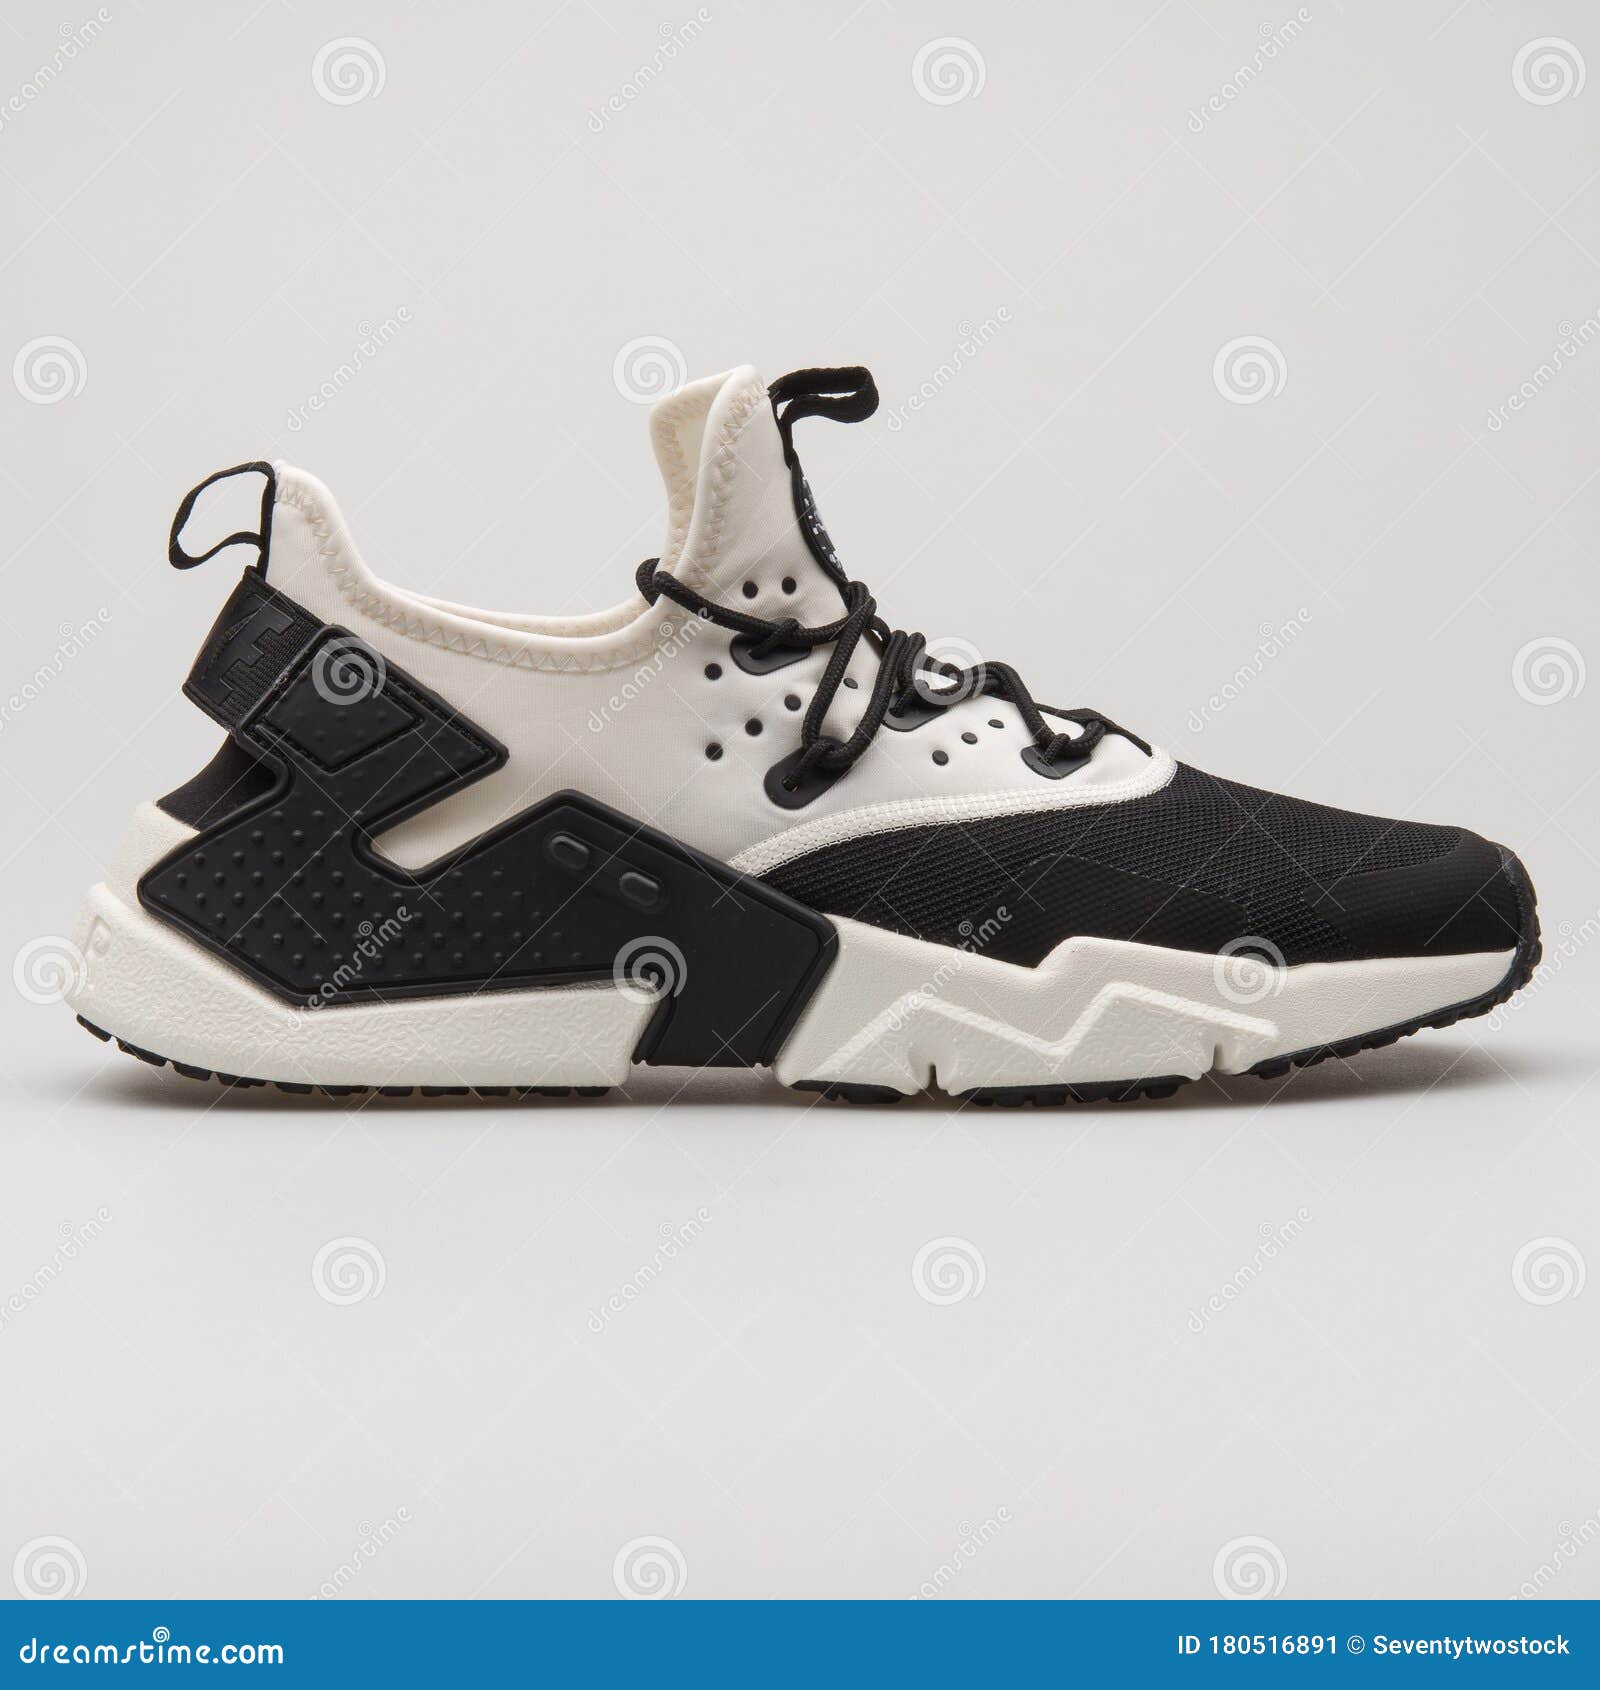 Nike Air Huarache Black and White Sneaker Photo - Image of isolated, nike: 180516891